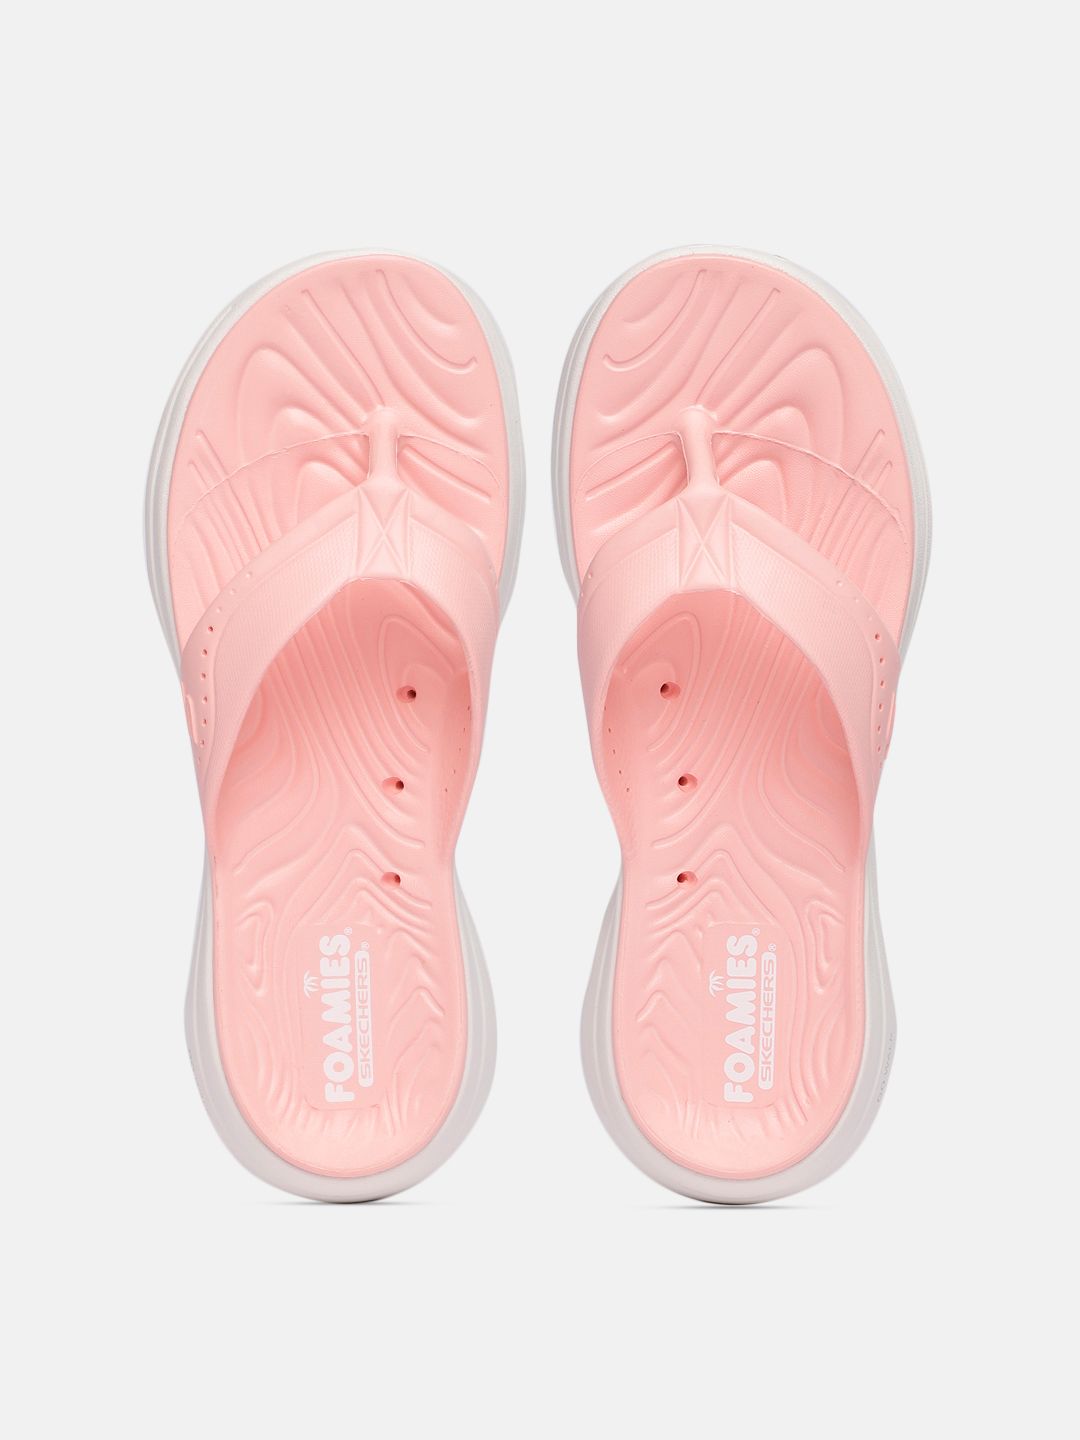 Skechers Women Pink Go Walk 5 - Fall For It Thong Flip-Flops Price in India